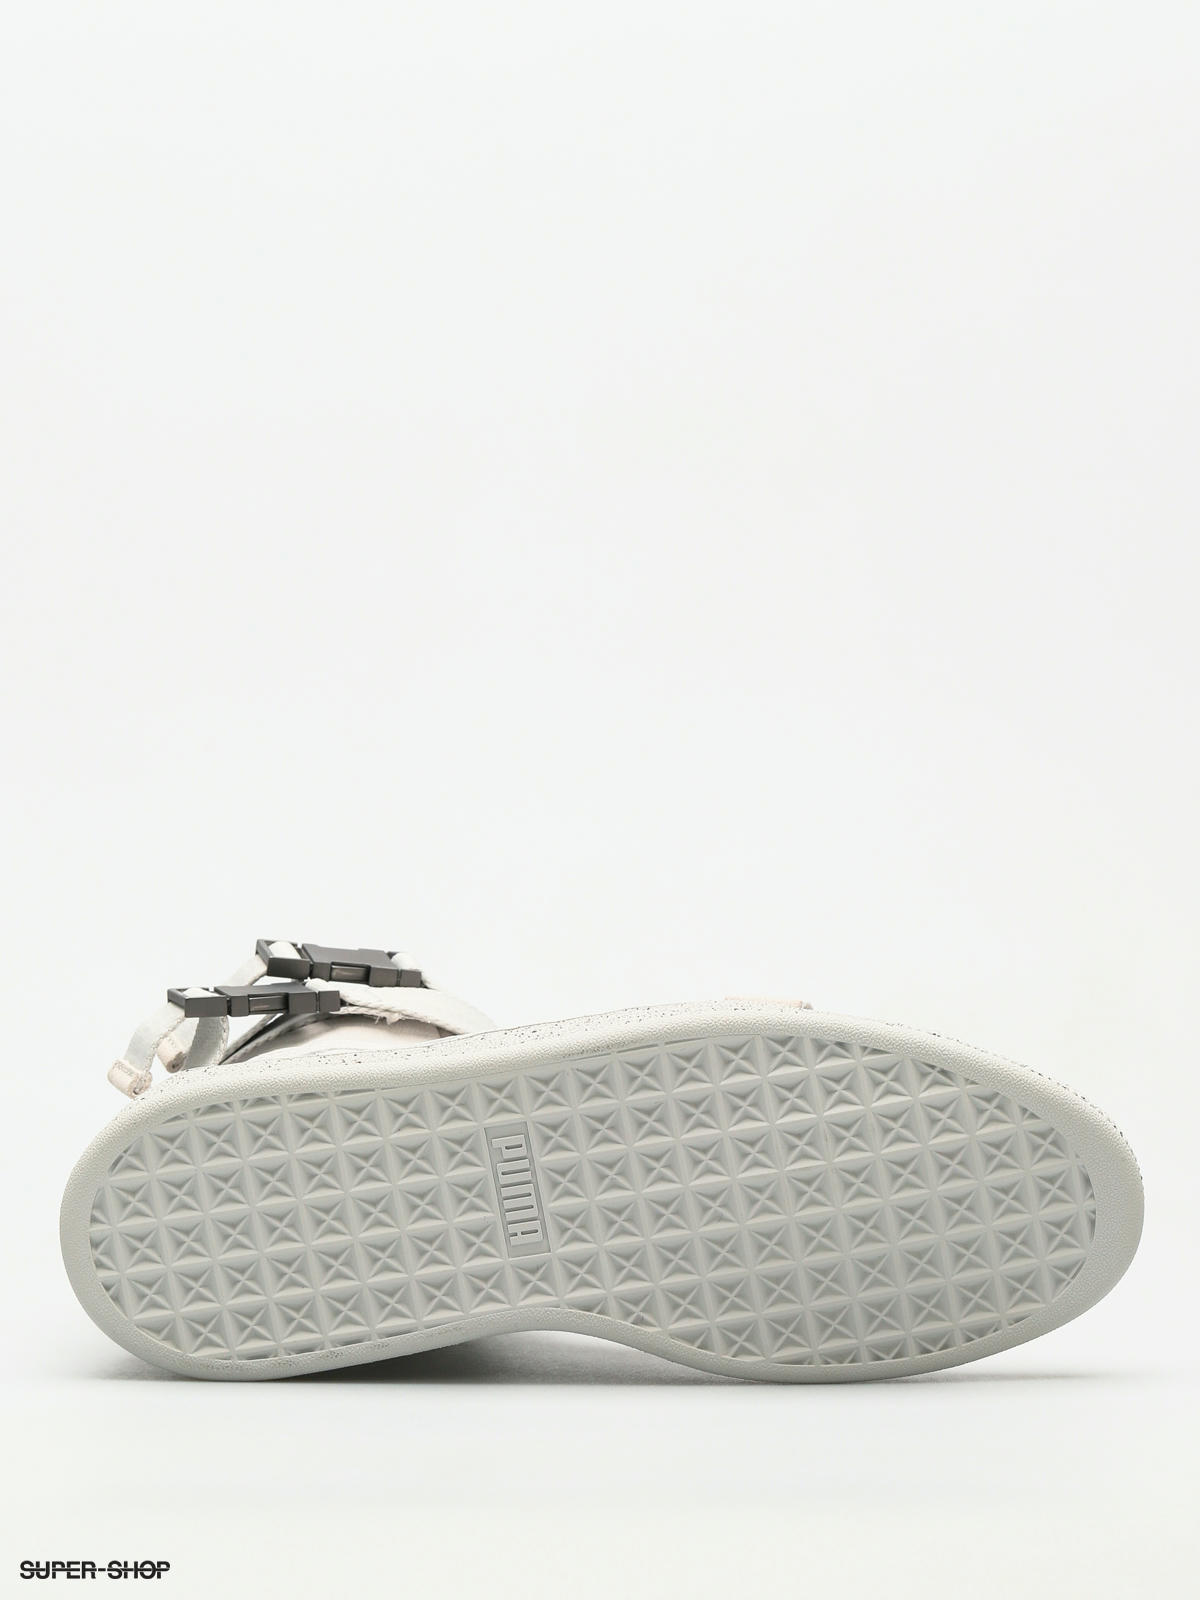 gray puma shoes